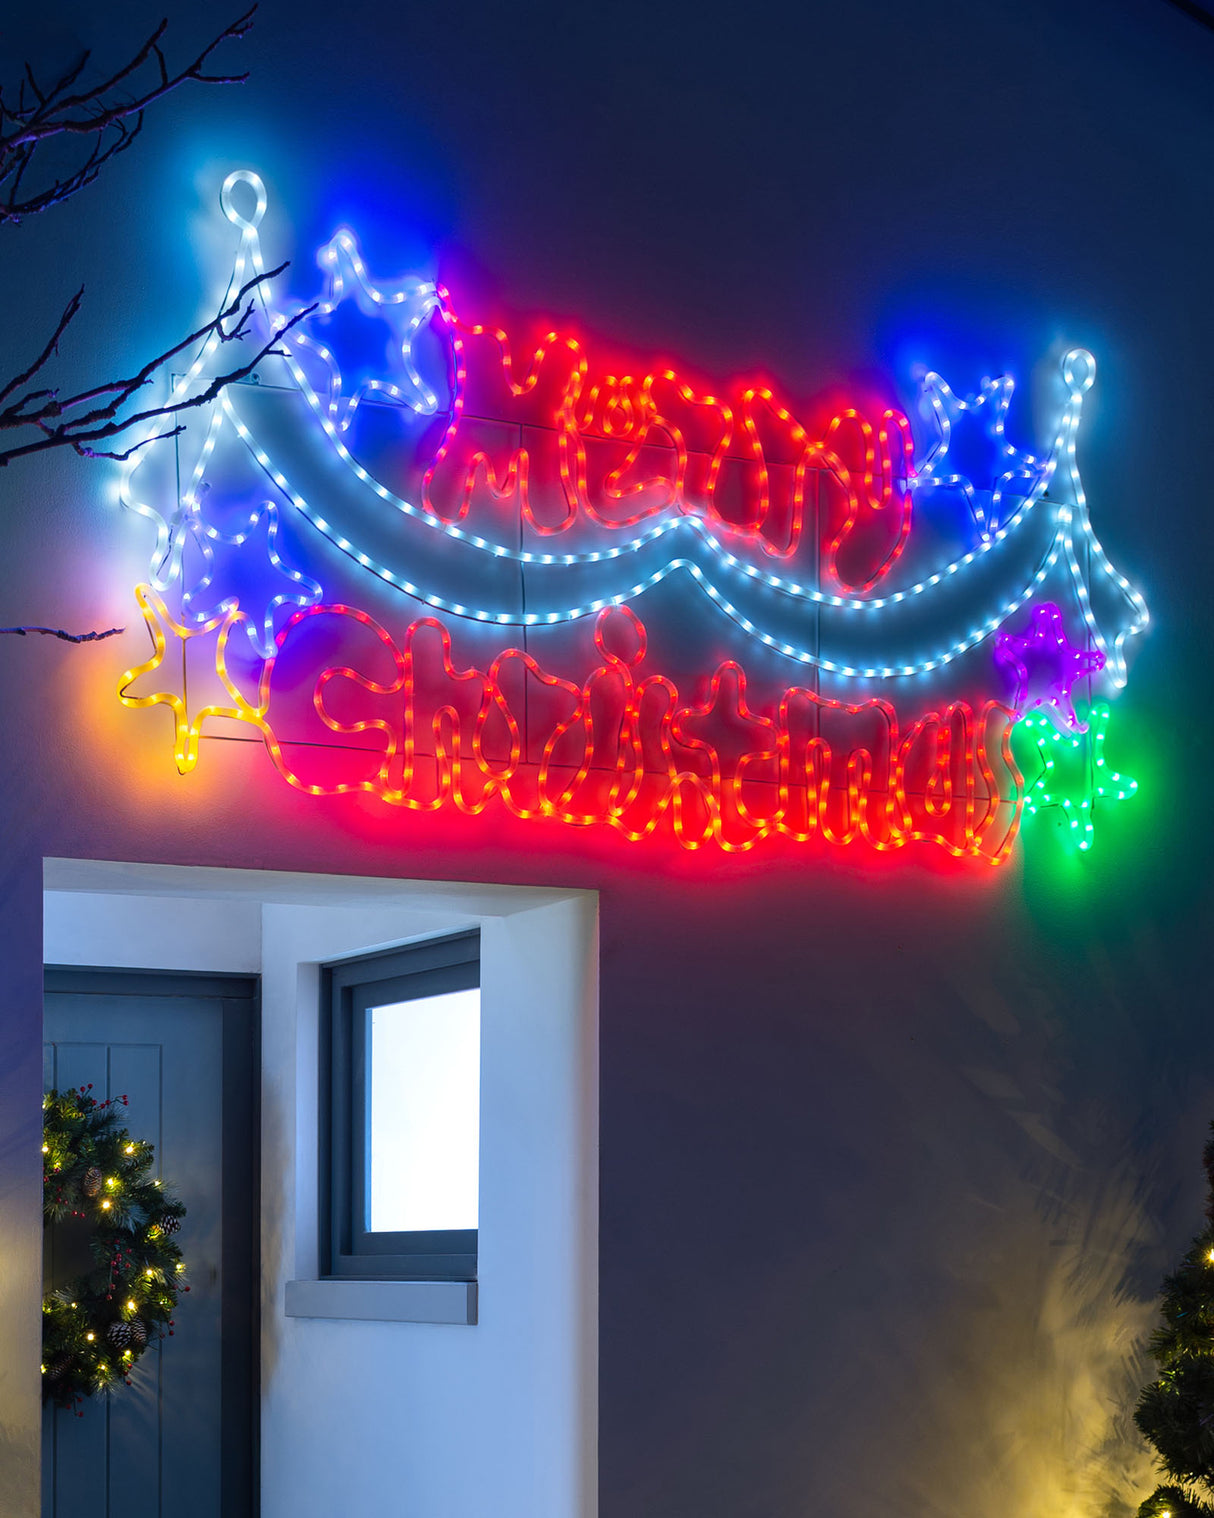 Merry Christmas Rope Light Silhouette, 195 cm